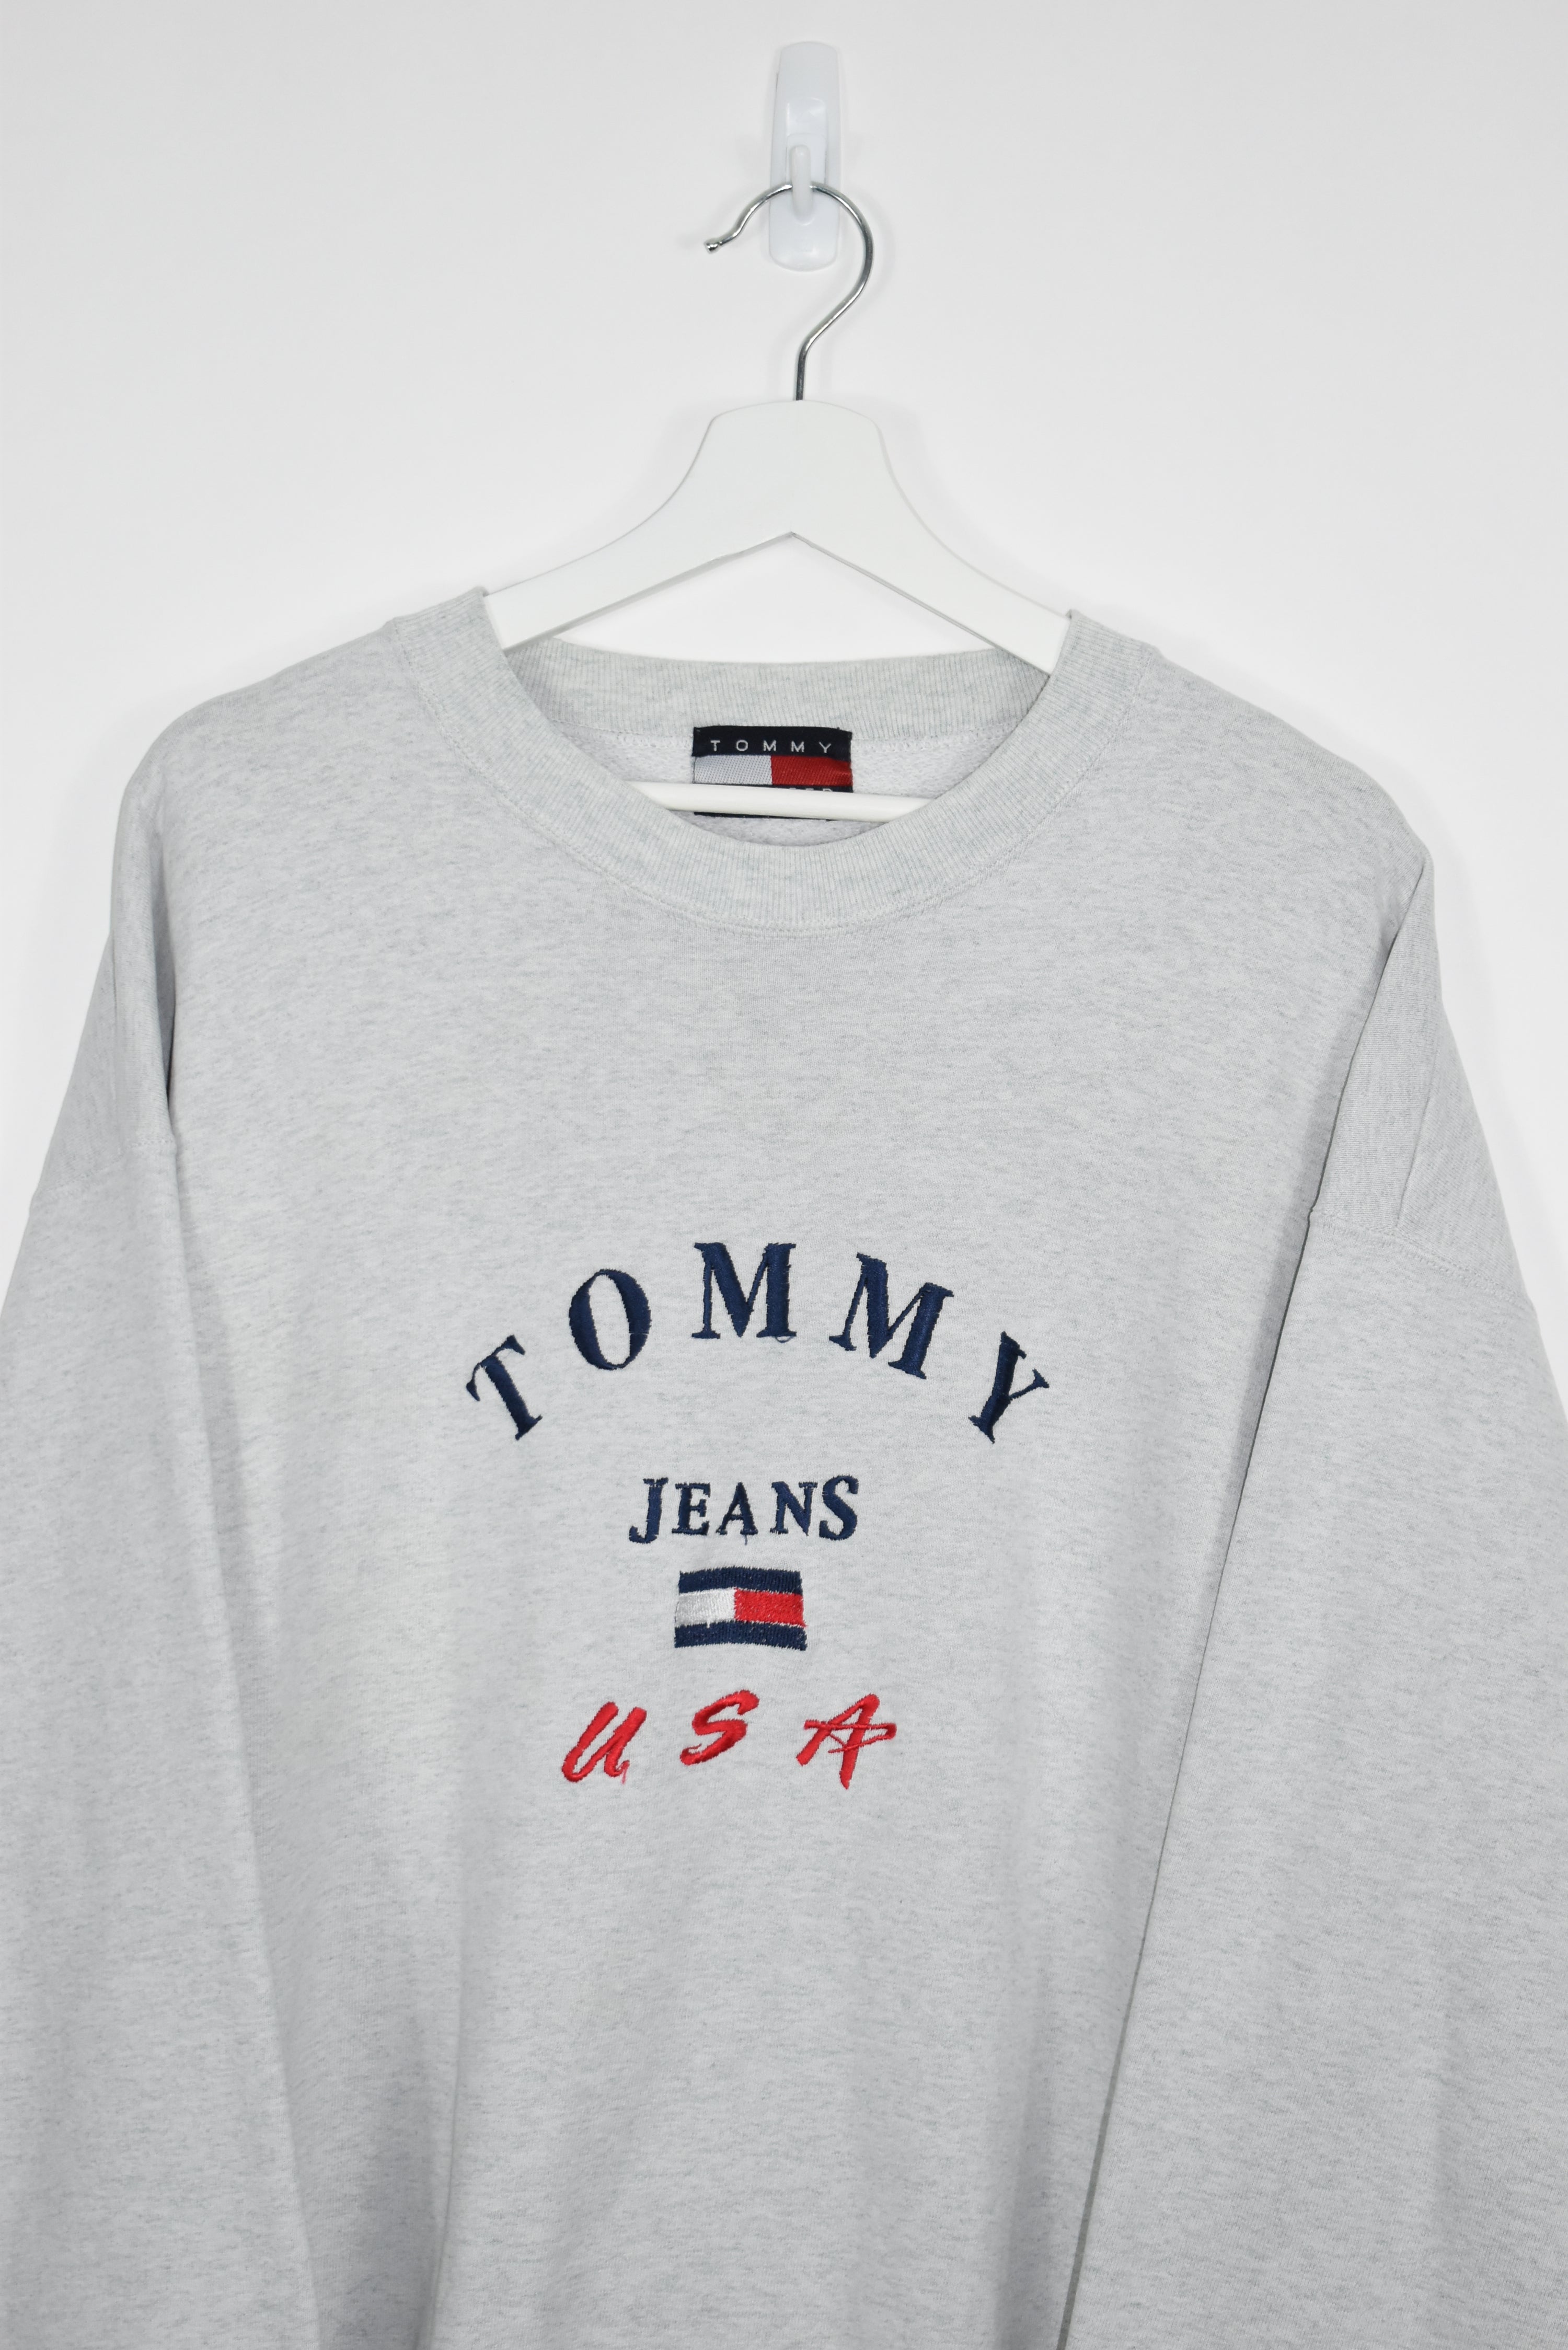 Vintage Tommy Embroidered Sweatshirt XLARGE